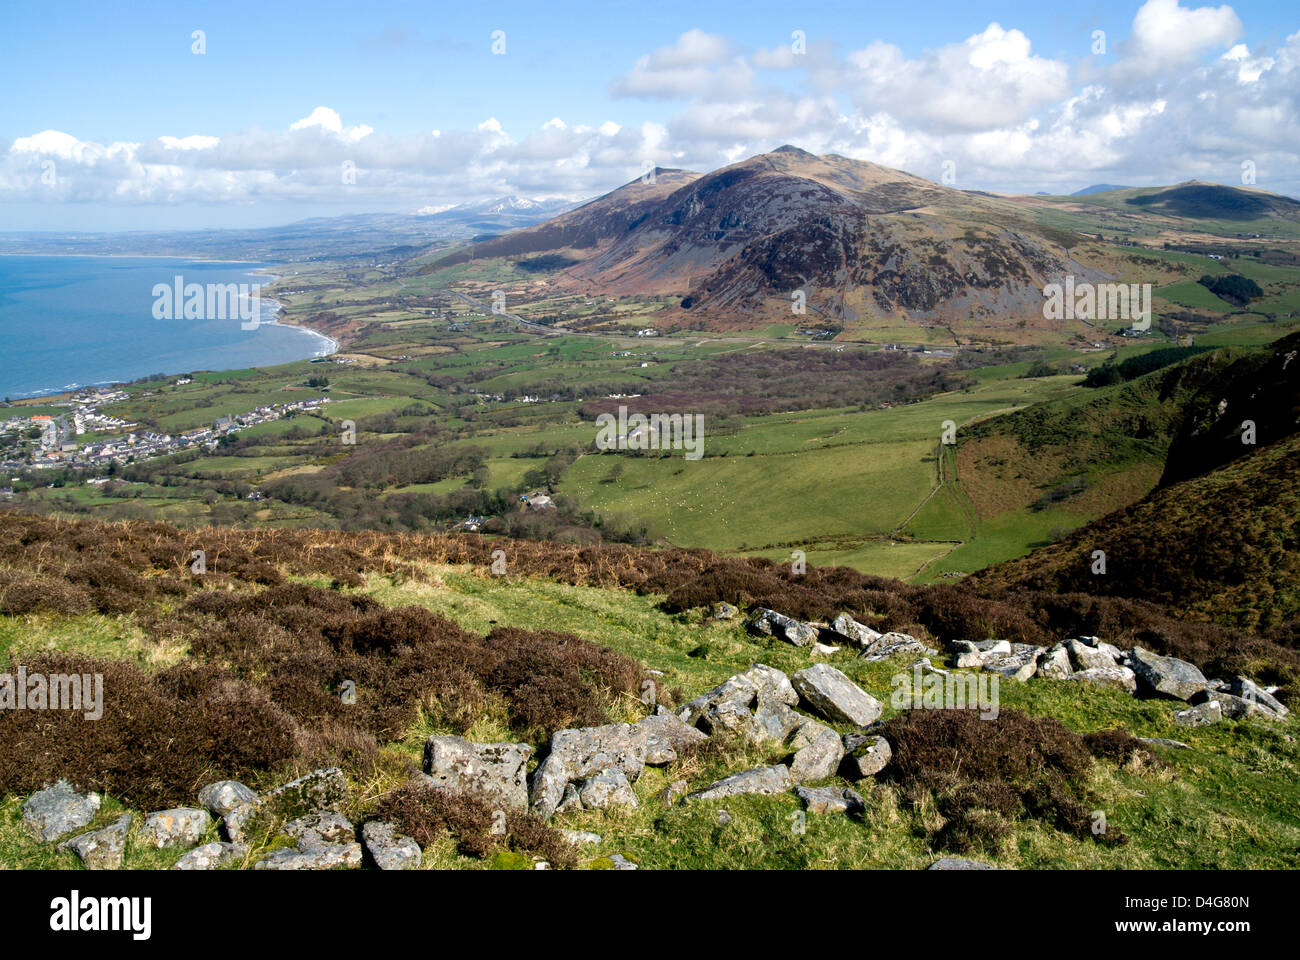 Gyrn Goch, Gyrn Ddu montagnes et de la baie de Caernarfon Llyn sentier des montagnes de la péninsule de lleyn Yr Eifl Gwynedd au Pays de Galles Banque D'Images